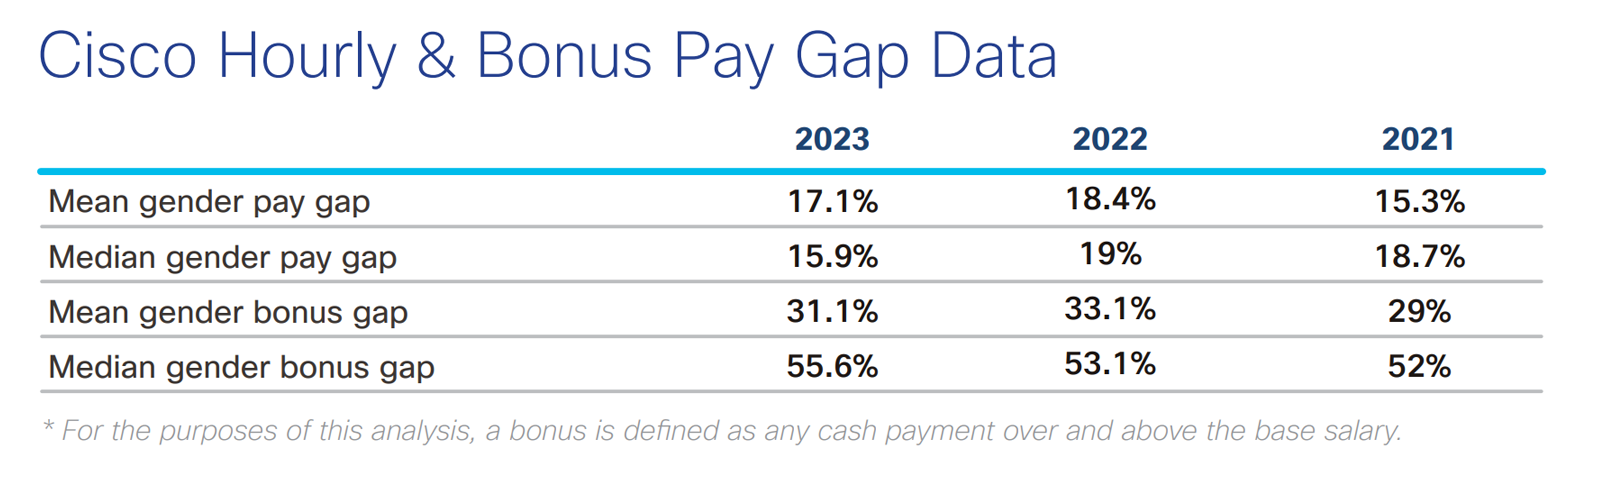 Cisco Pay Gap Data